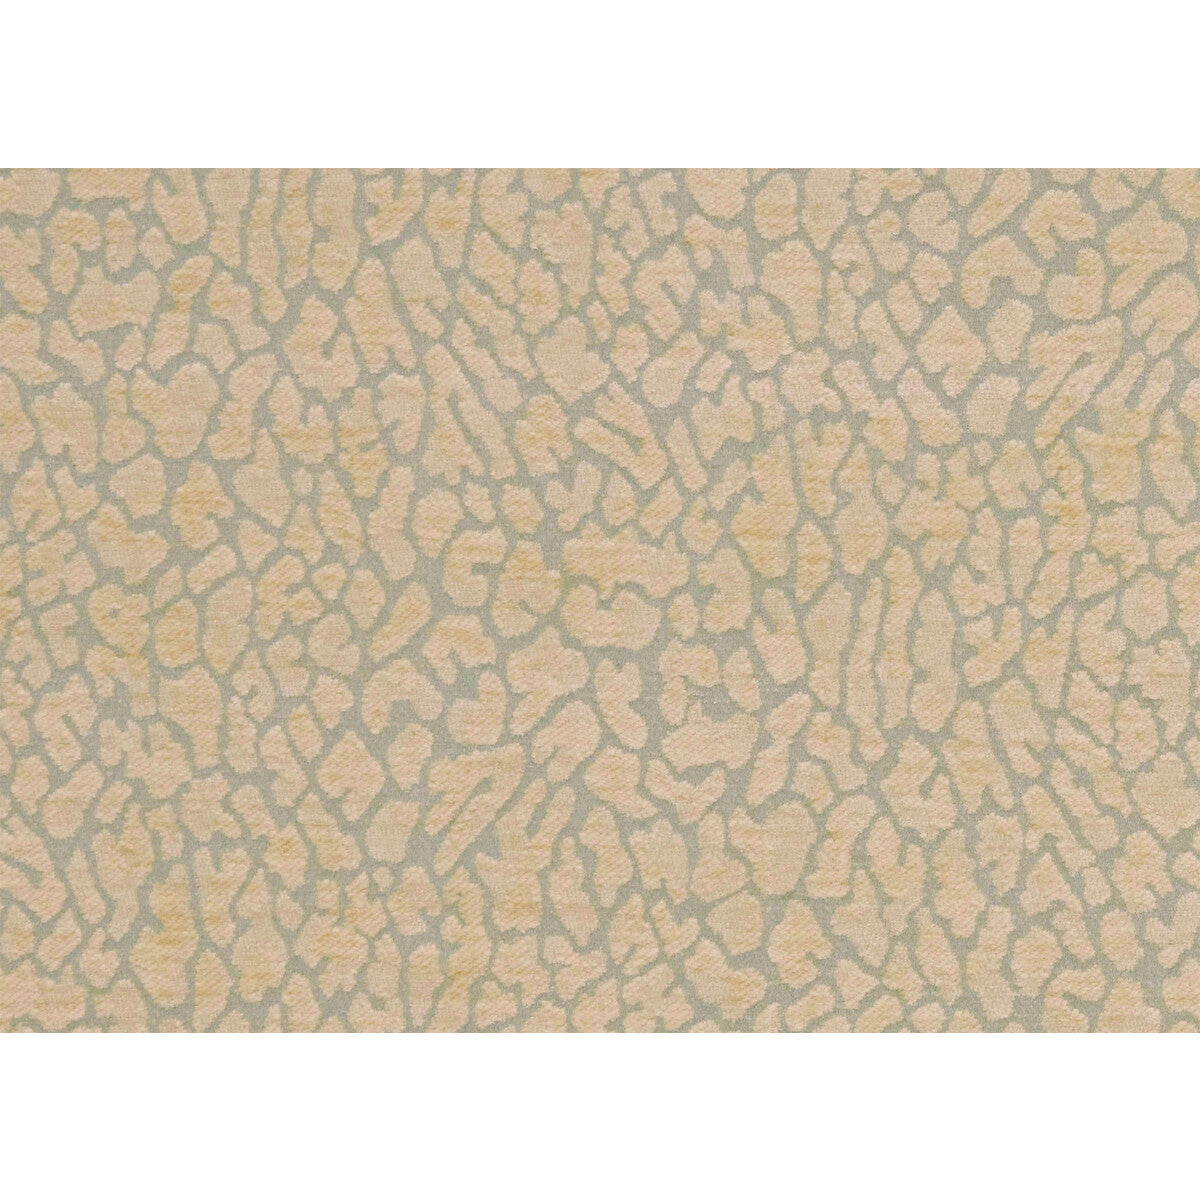 Kravet Smart fabric in 34319-1516 color - pattern 34319.1516.0 - by Kravet Smart